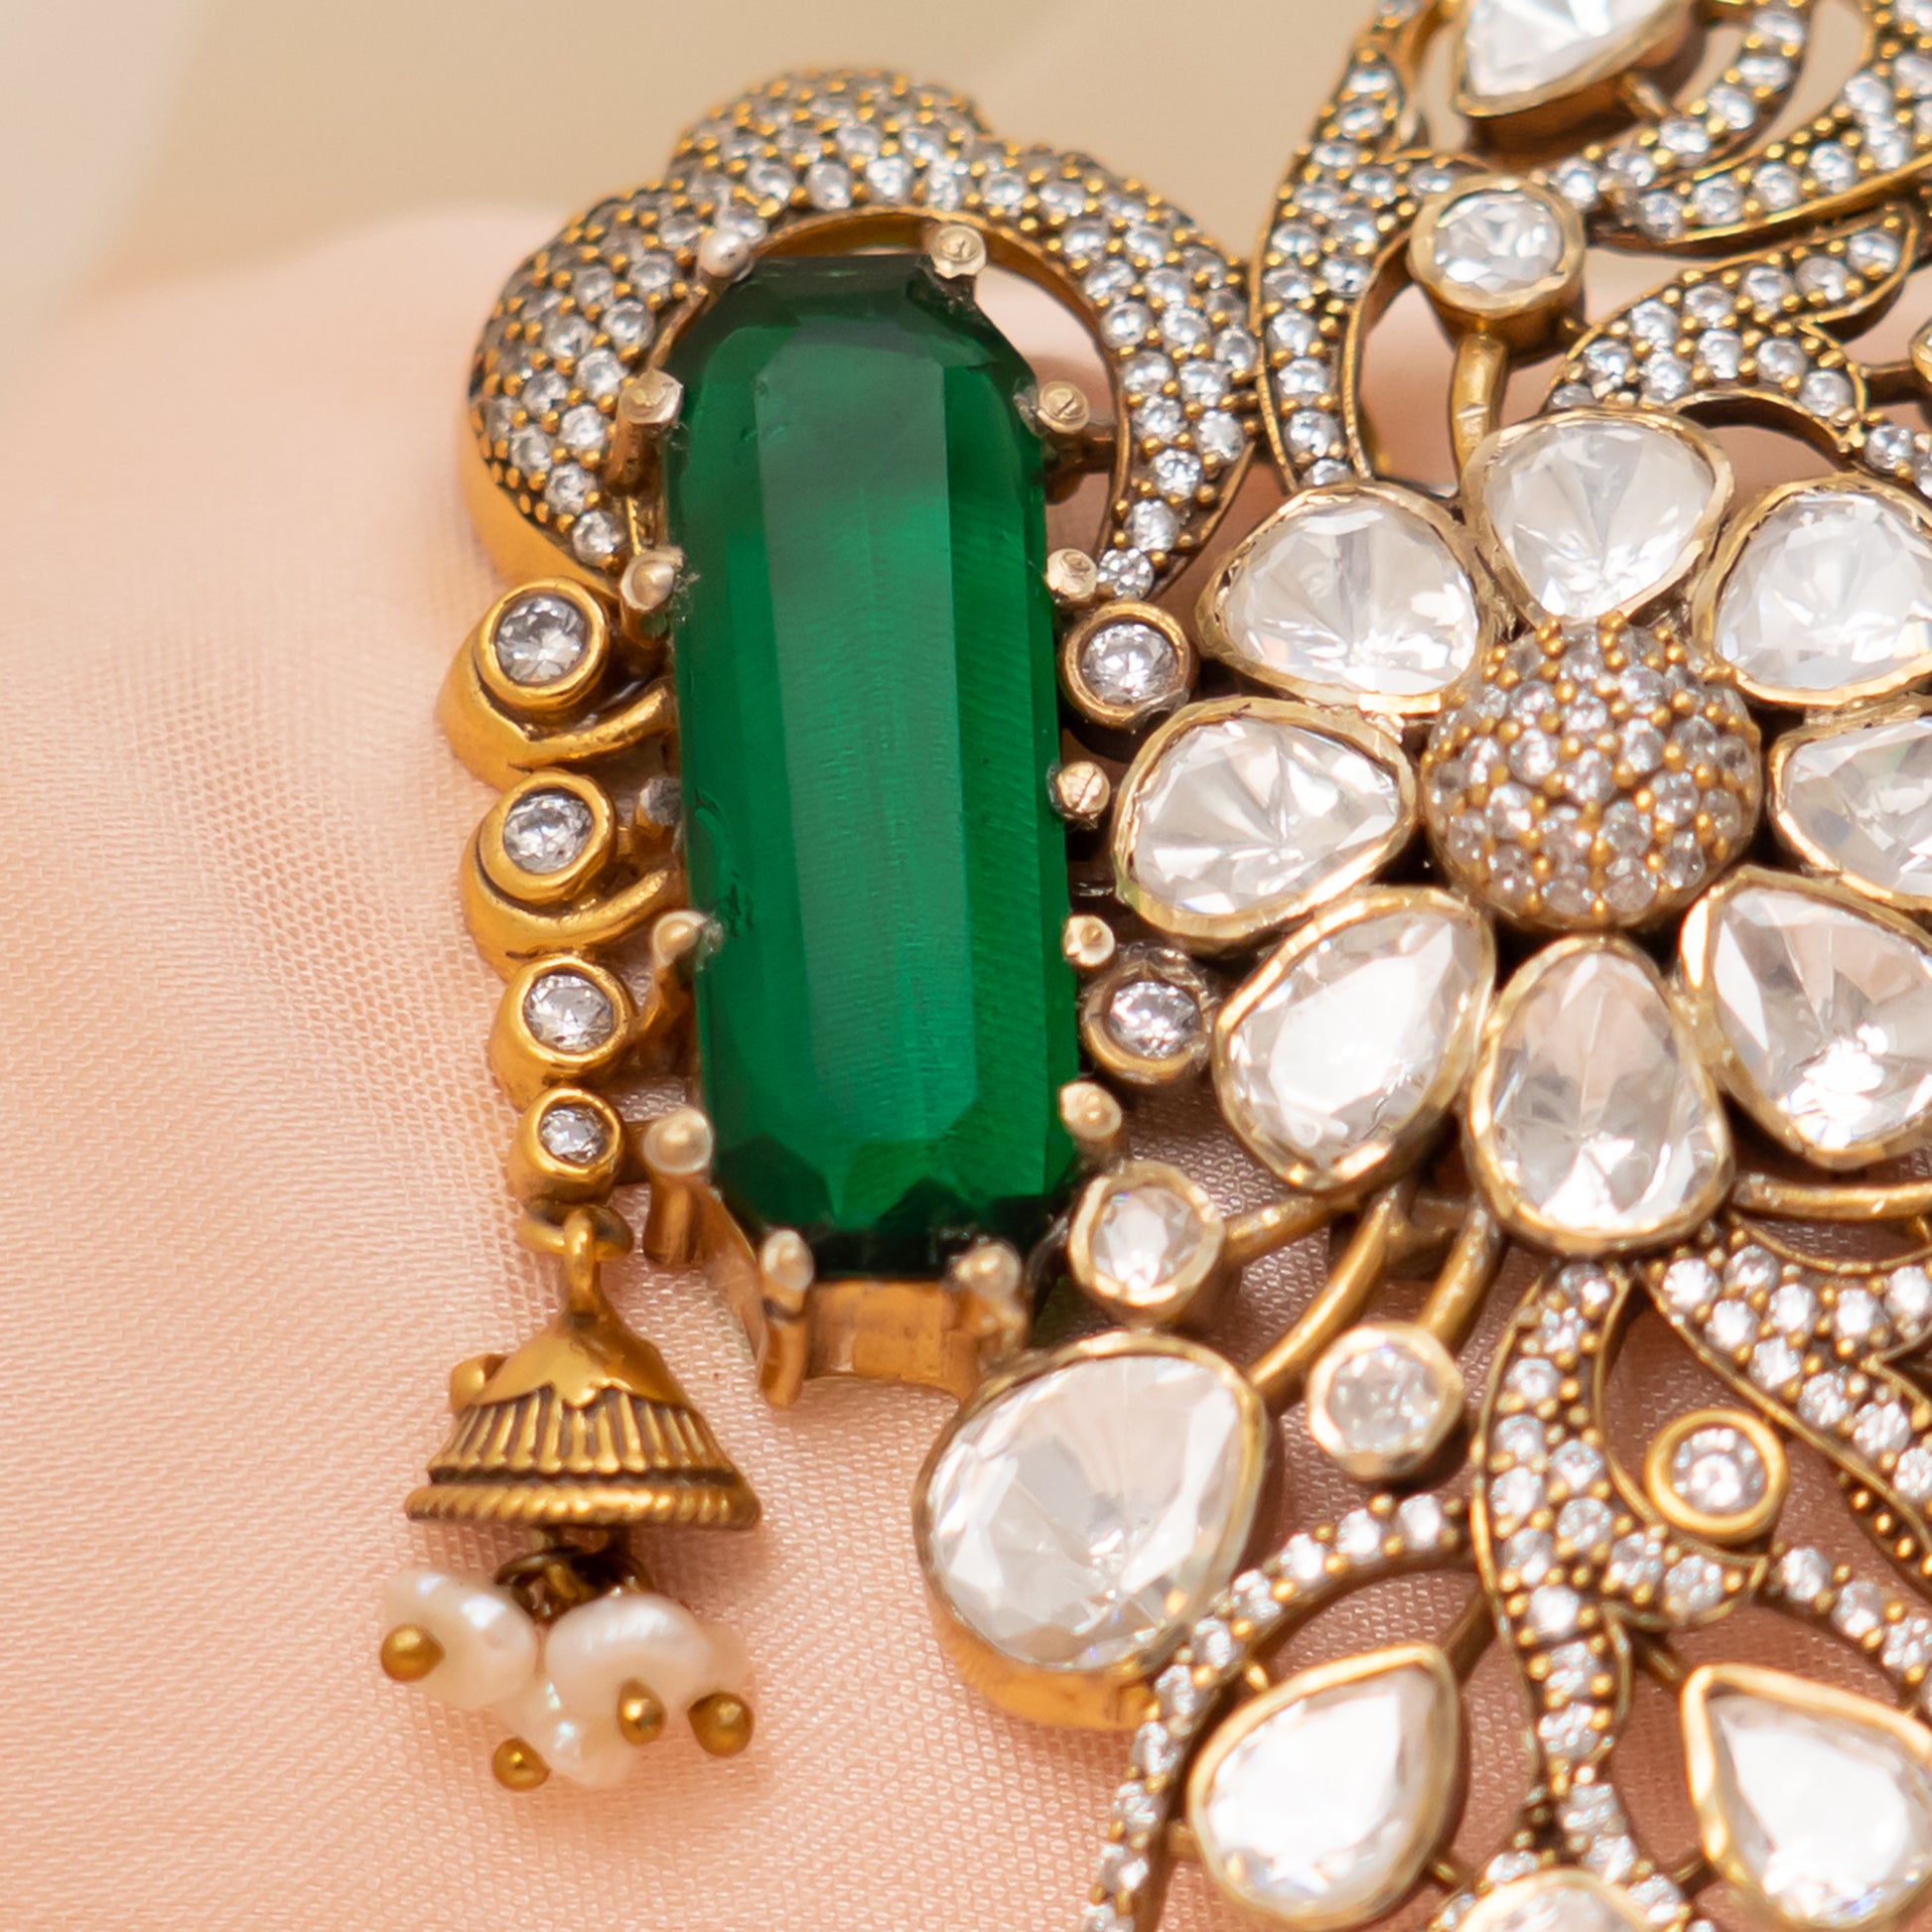 Adhiraa silver pendant, 92.5 silver gold-plated pendant featuring emerald moissanite and cz stones, designer pendant